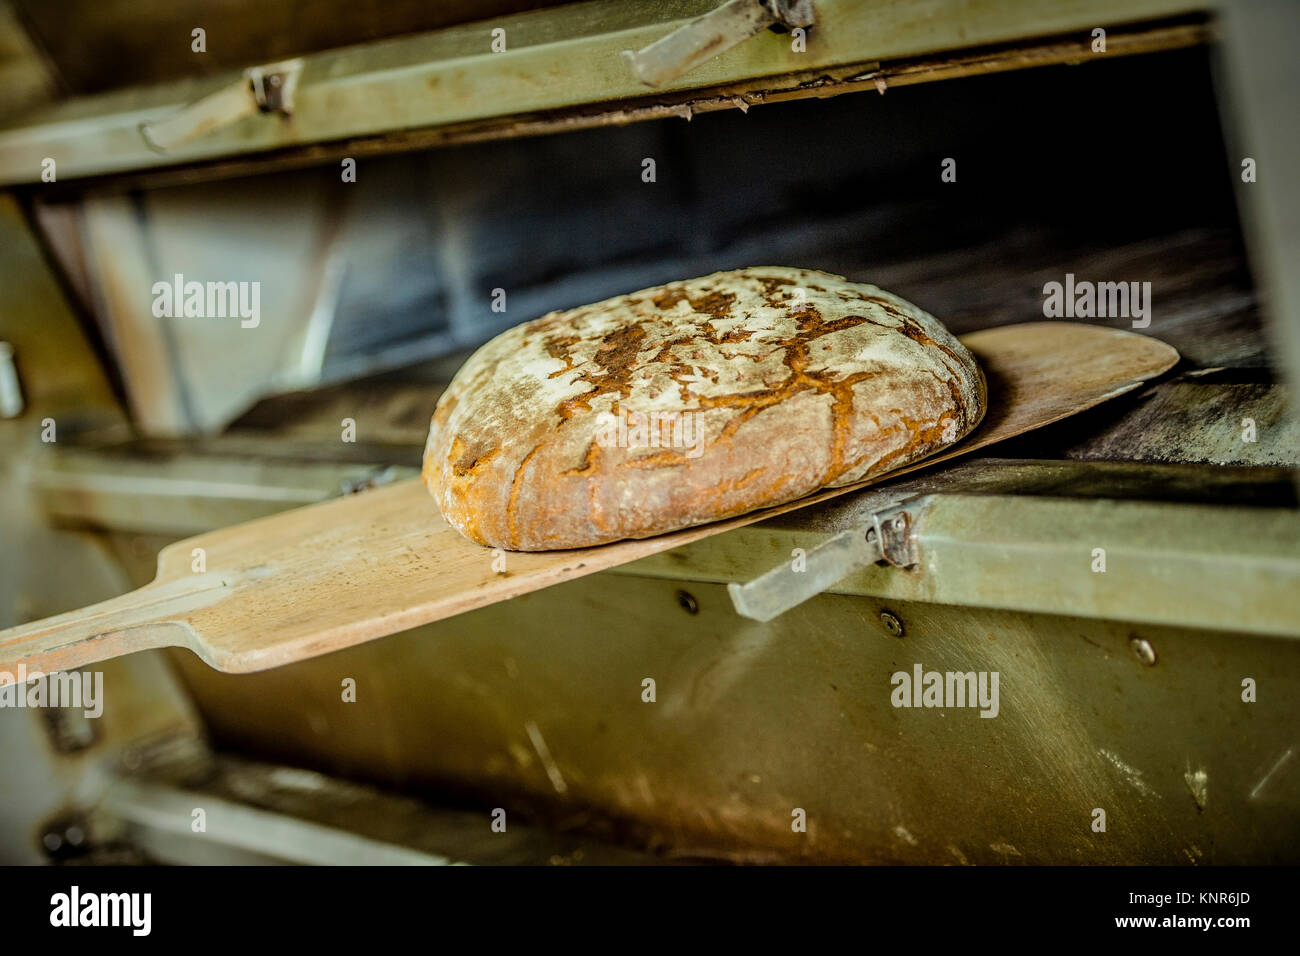 Brot backen, Backstube" - la cottura del pane Foto Stock